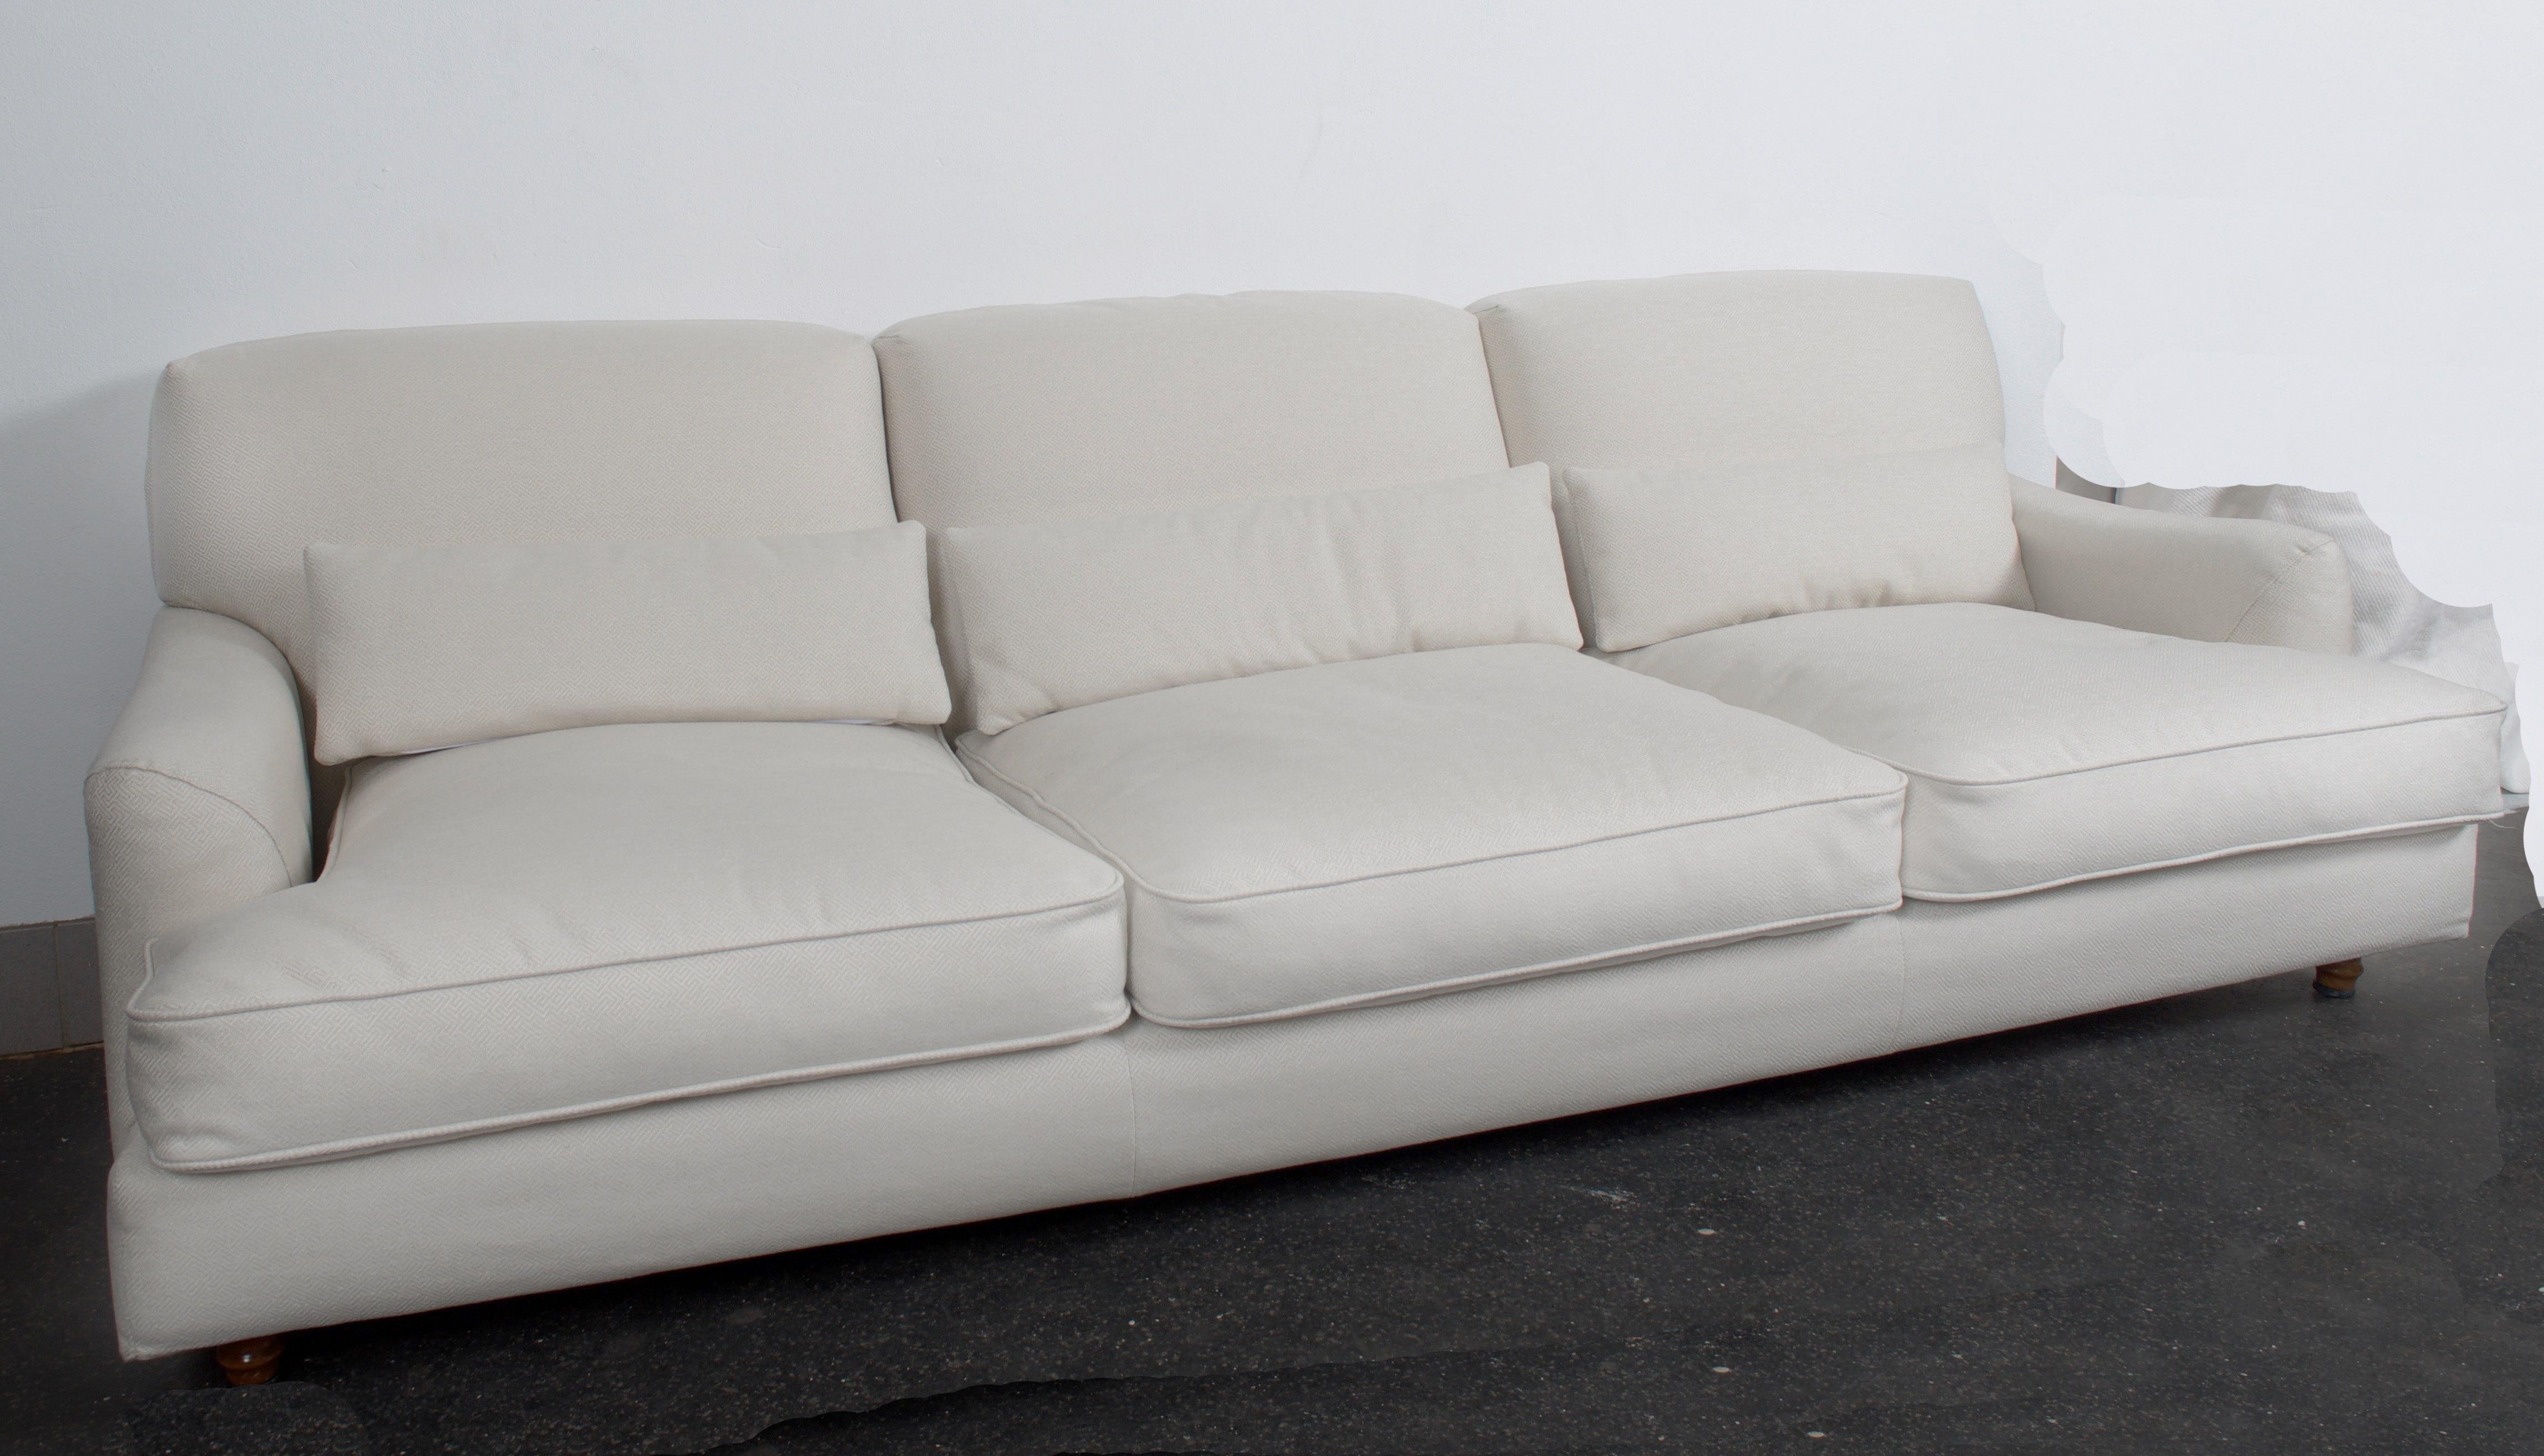 Vico Magistretti for Depadova Three-Seat Sofa Model Raffles For Sale 8